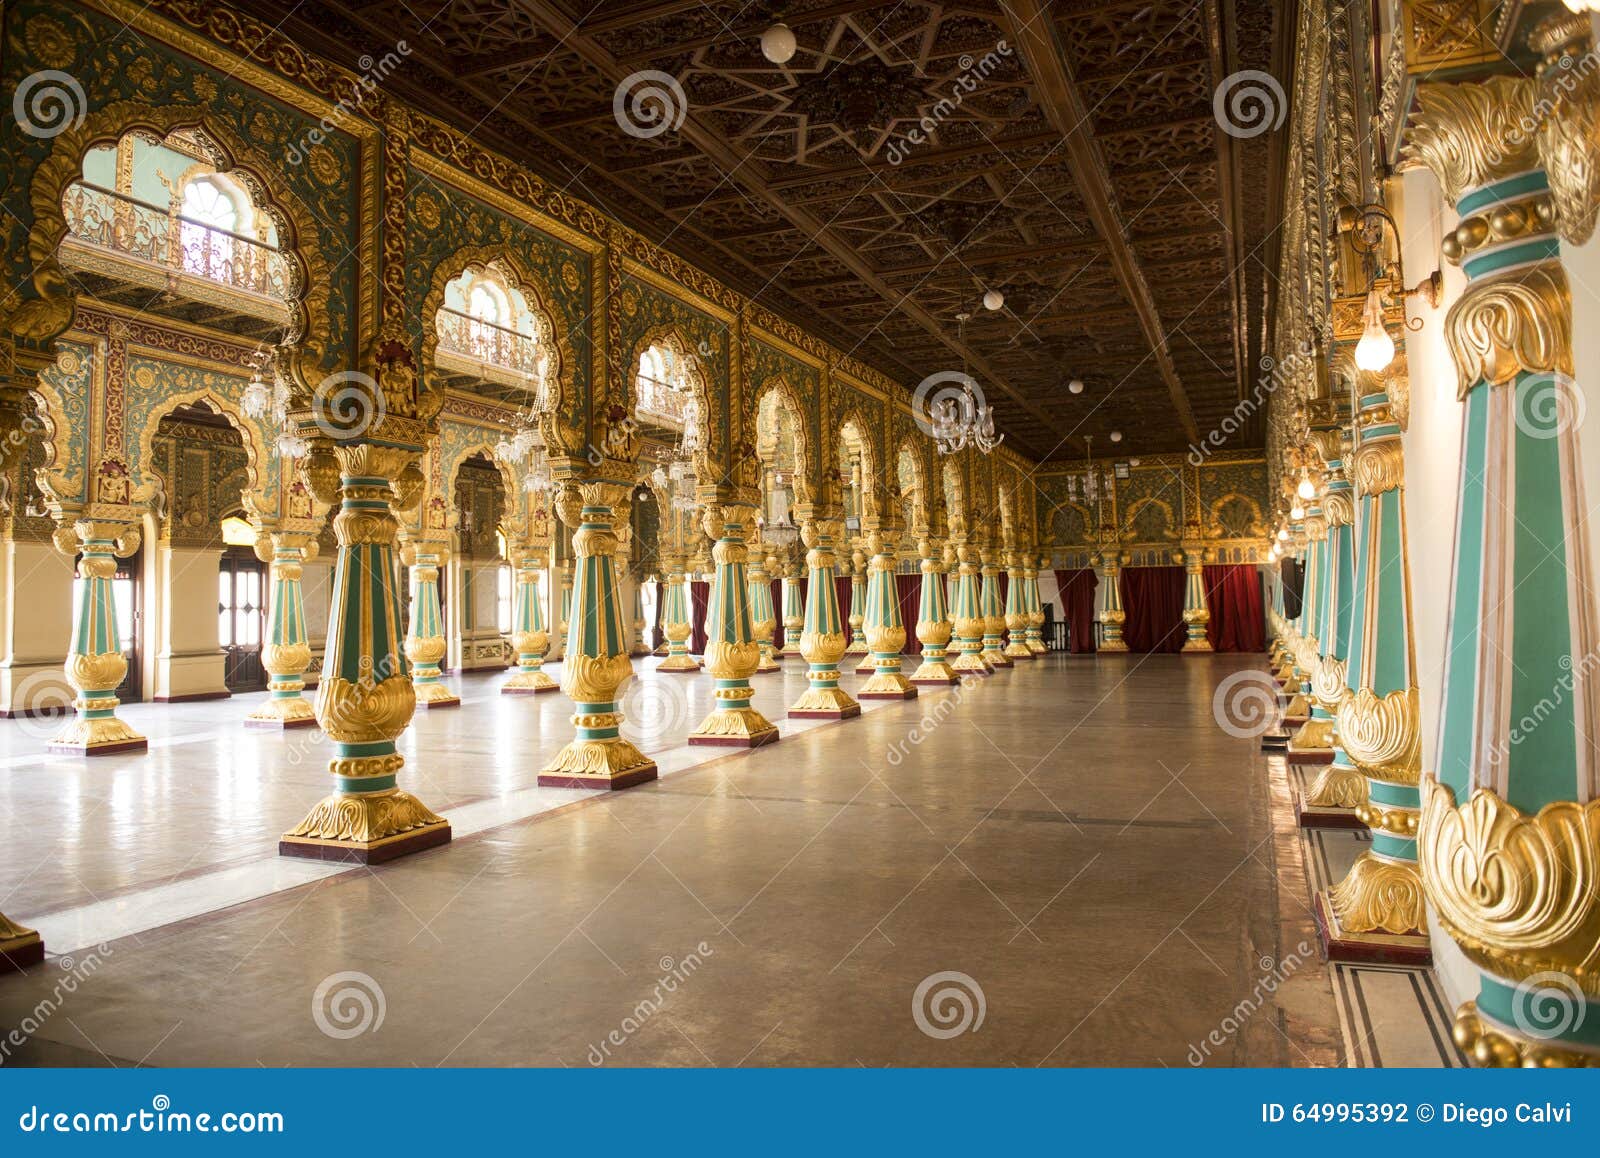 inside the mysore royal palace, india